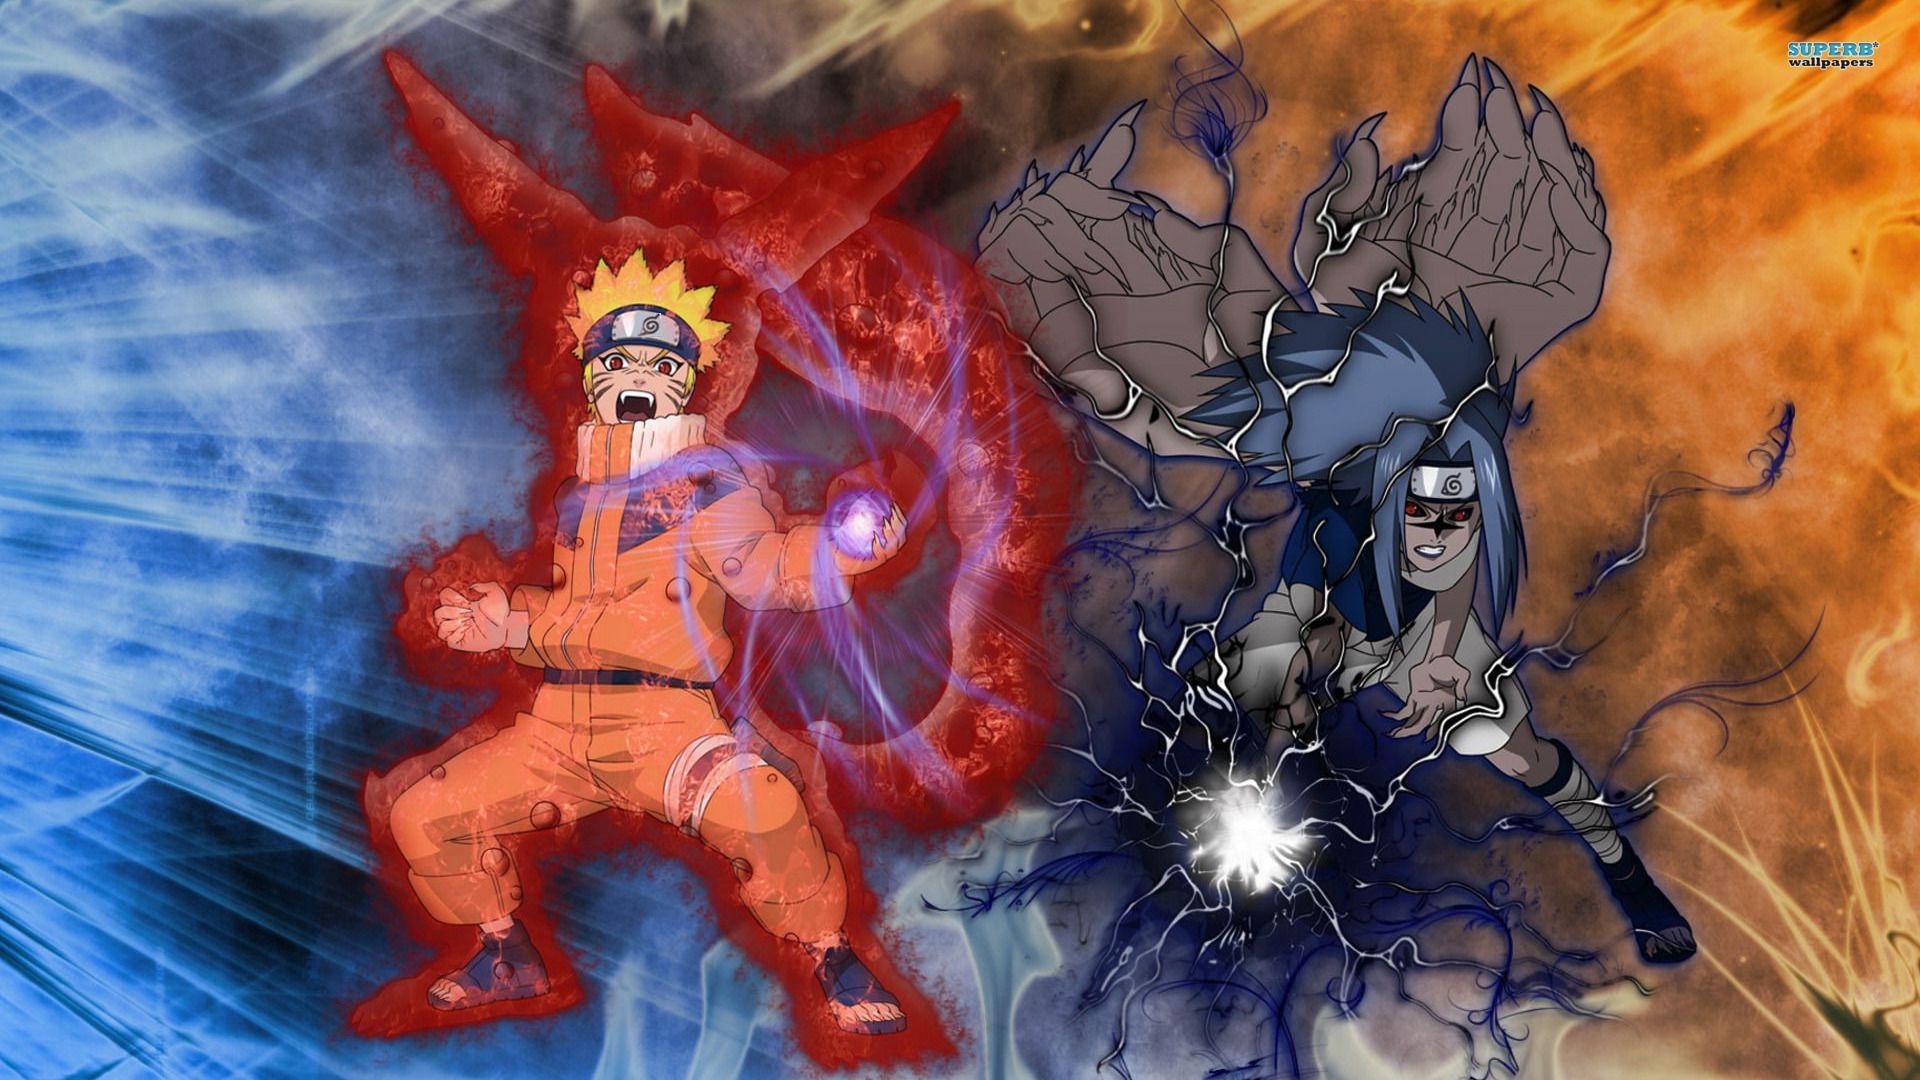 Naruto wallpaper - Anime wallpapers - #13704